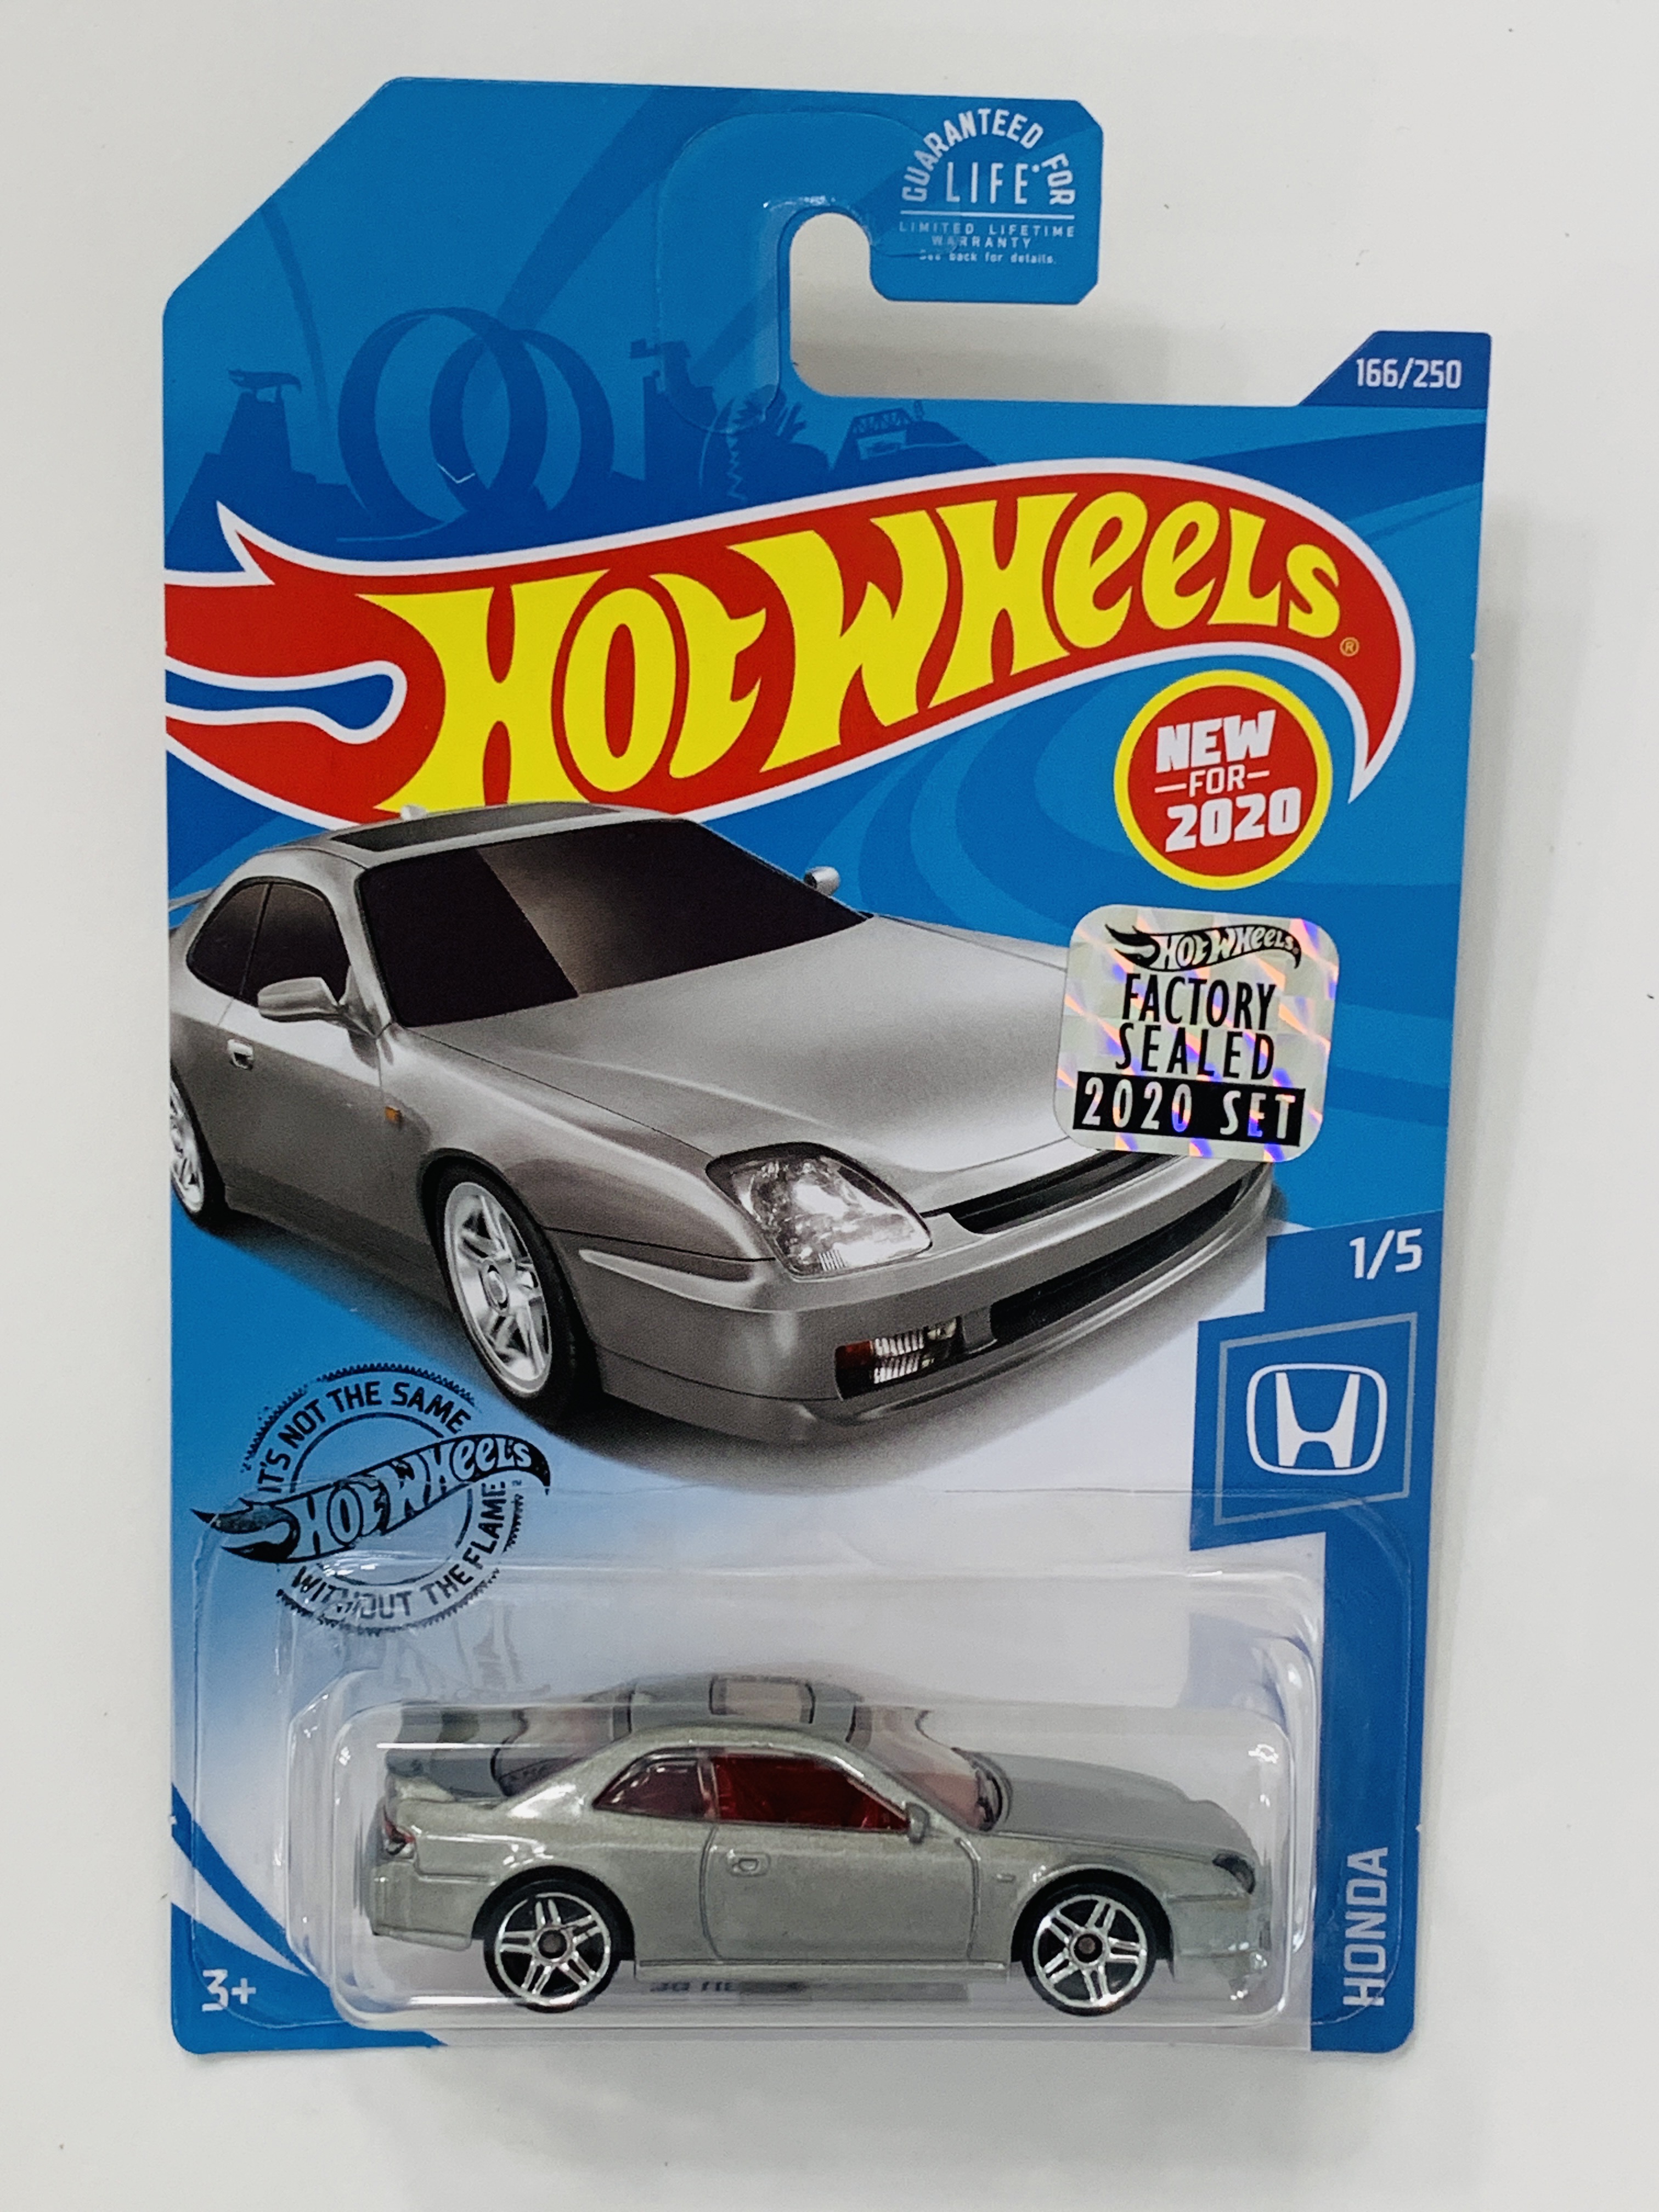 Hot Wheels 2020 Factory Set #166 '98 Honda Prelude - Silver